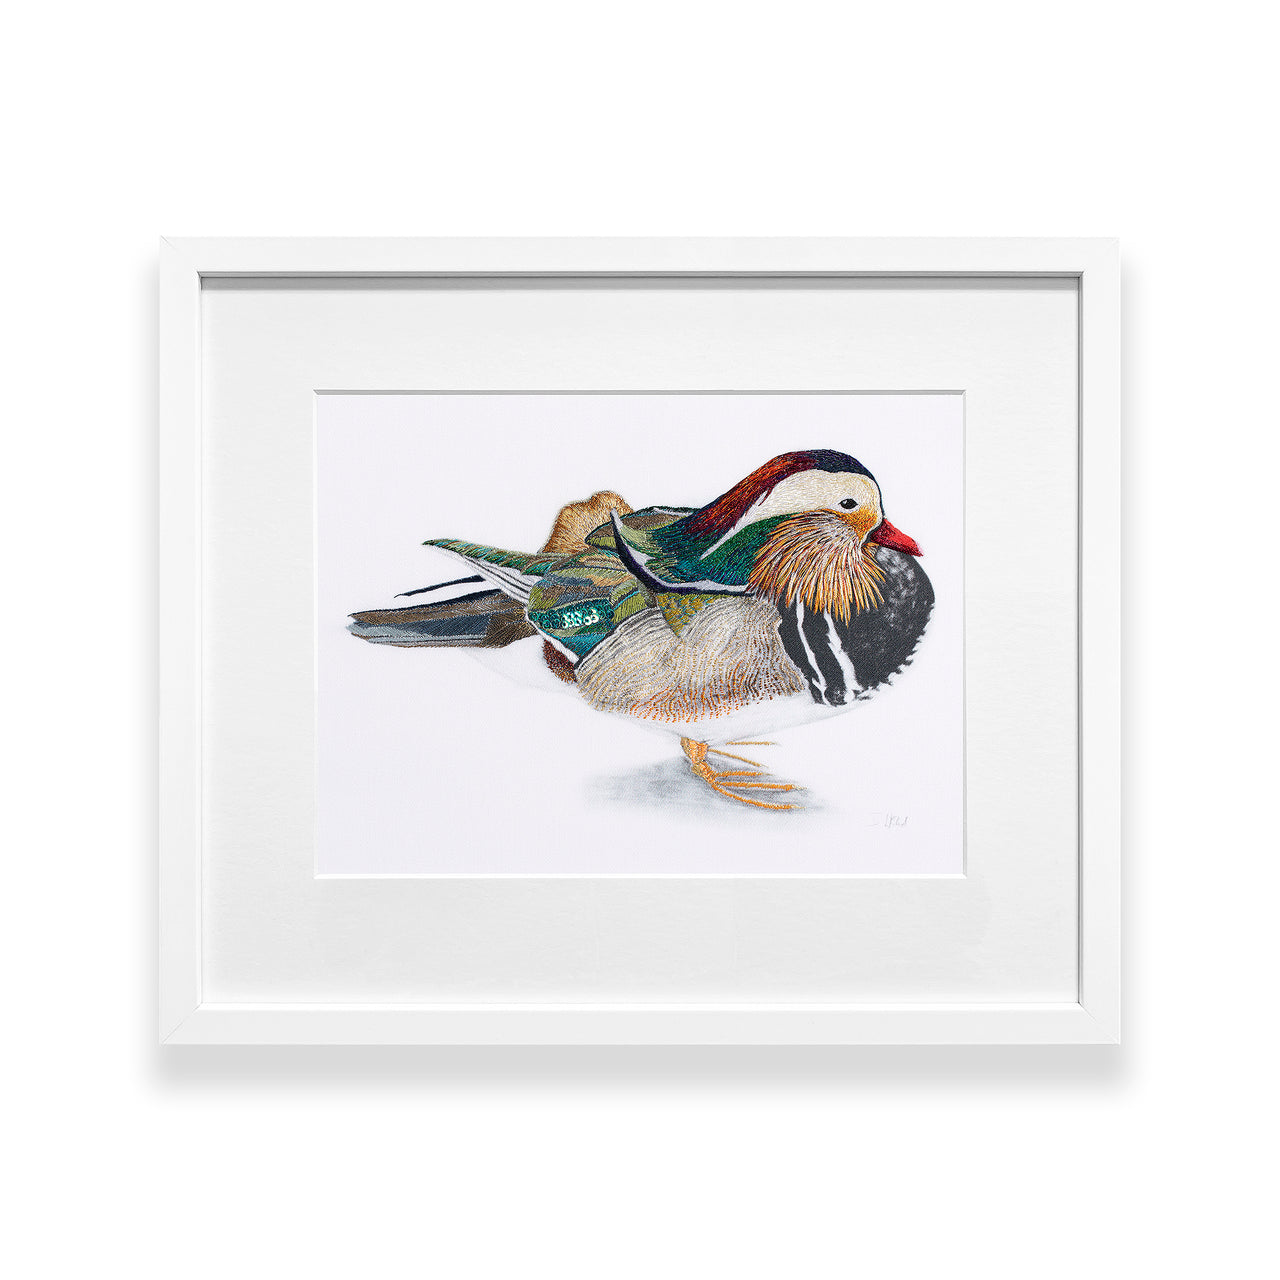 Mandarin duck original hand embroidered artwork framed